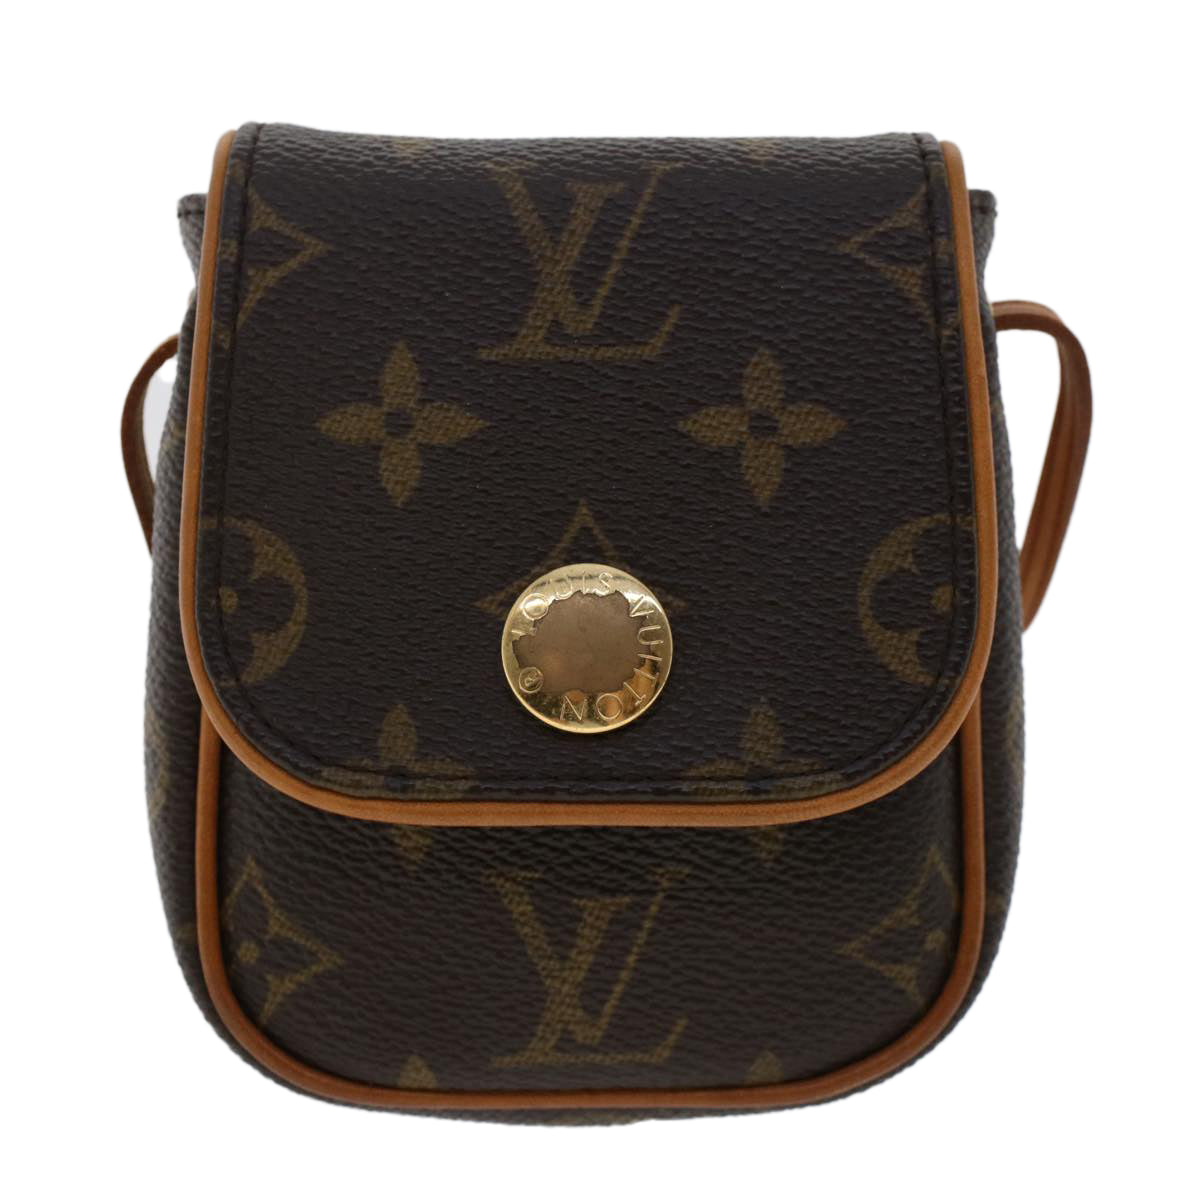 Louis Vuitton Cancun Brown Canvas Clutch Bag (Pre-Owned)